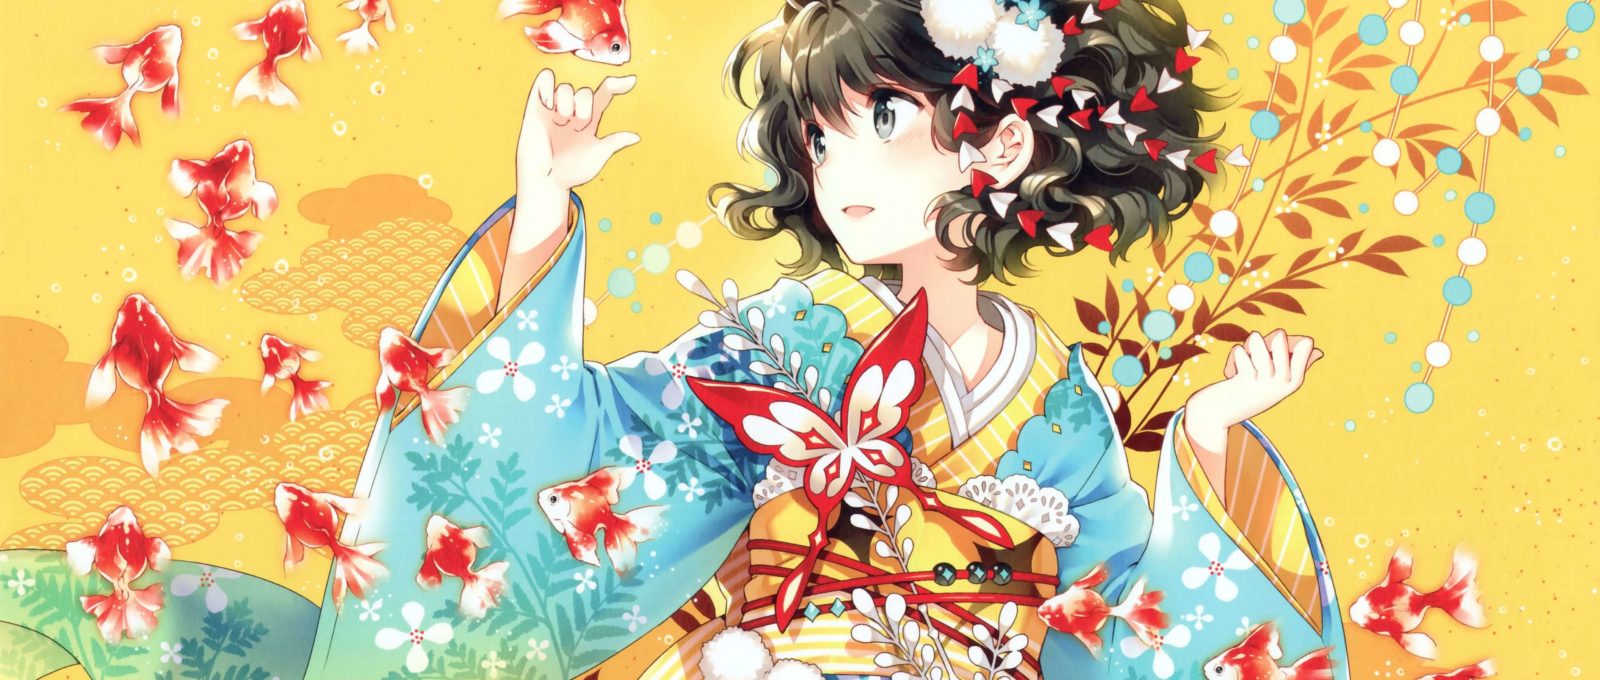 Anime Girl In Kimono